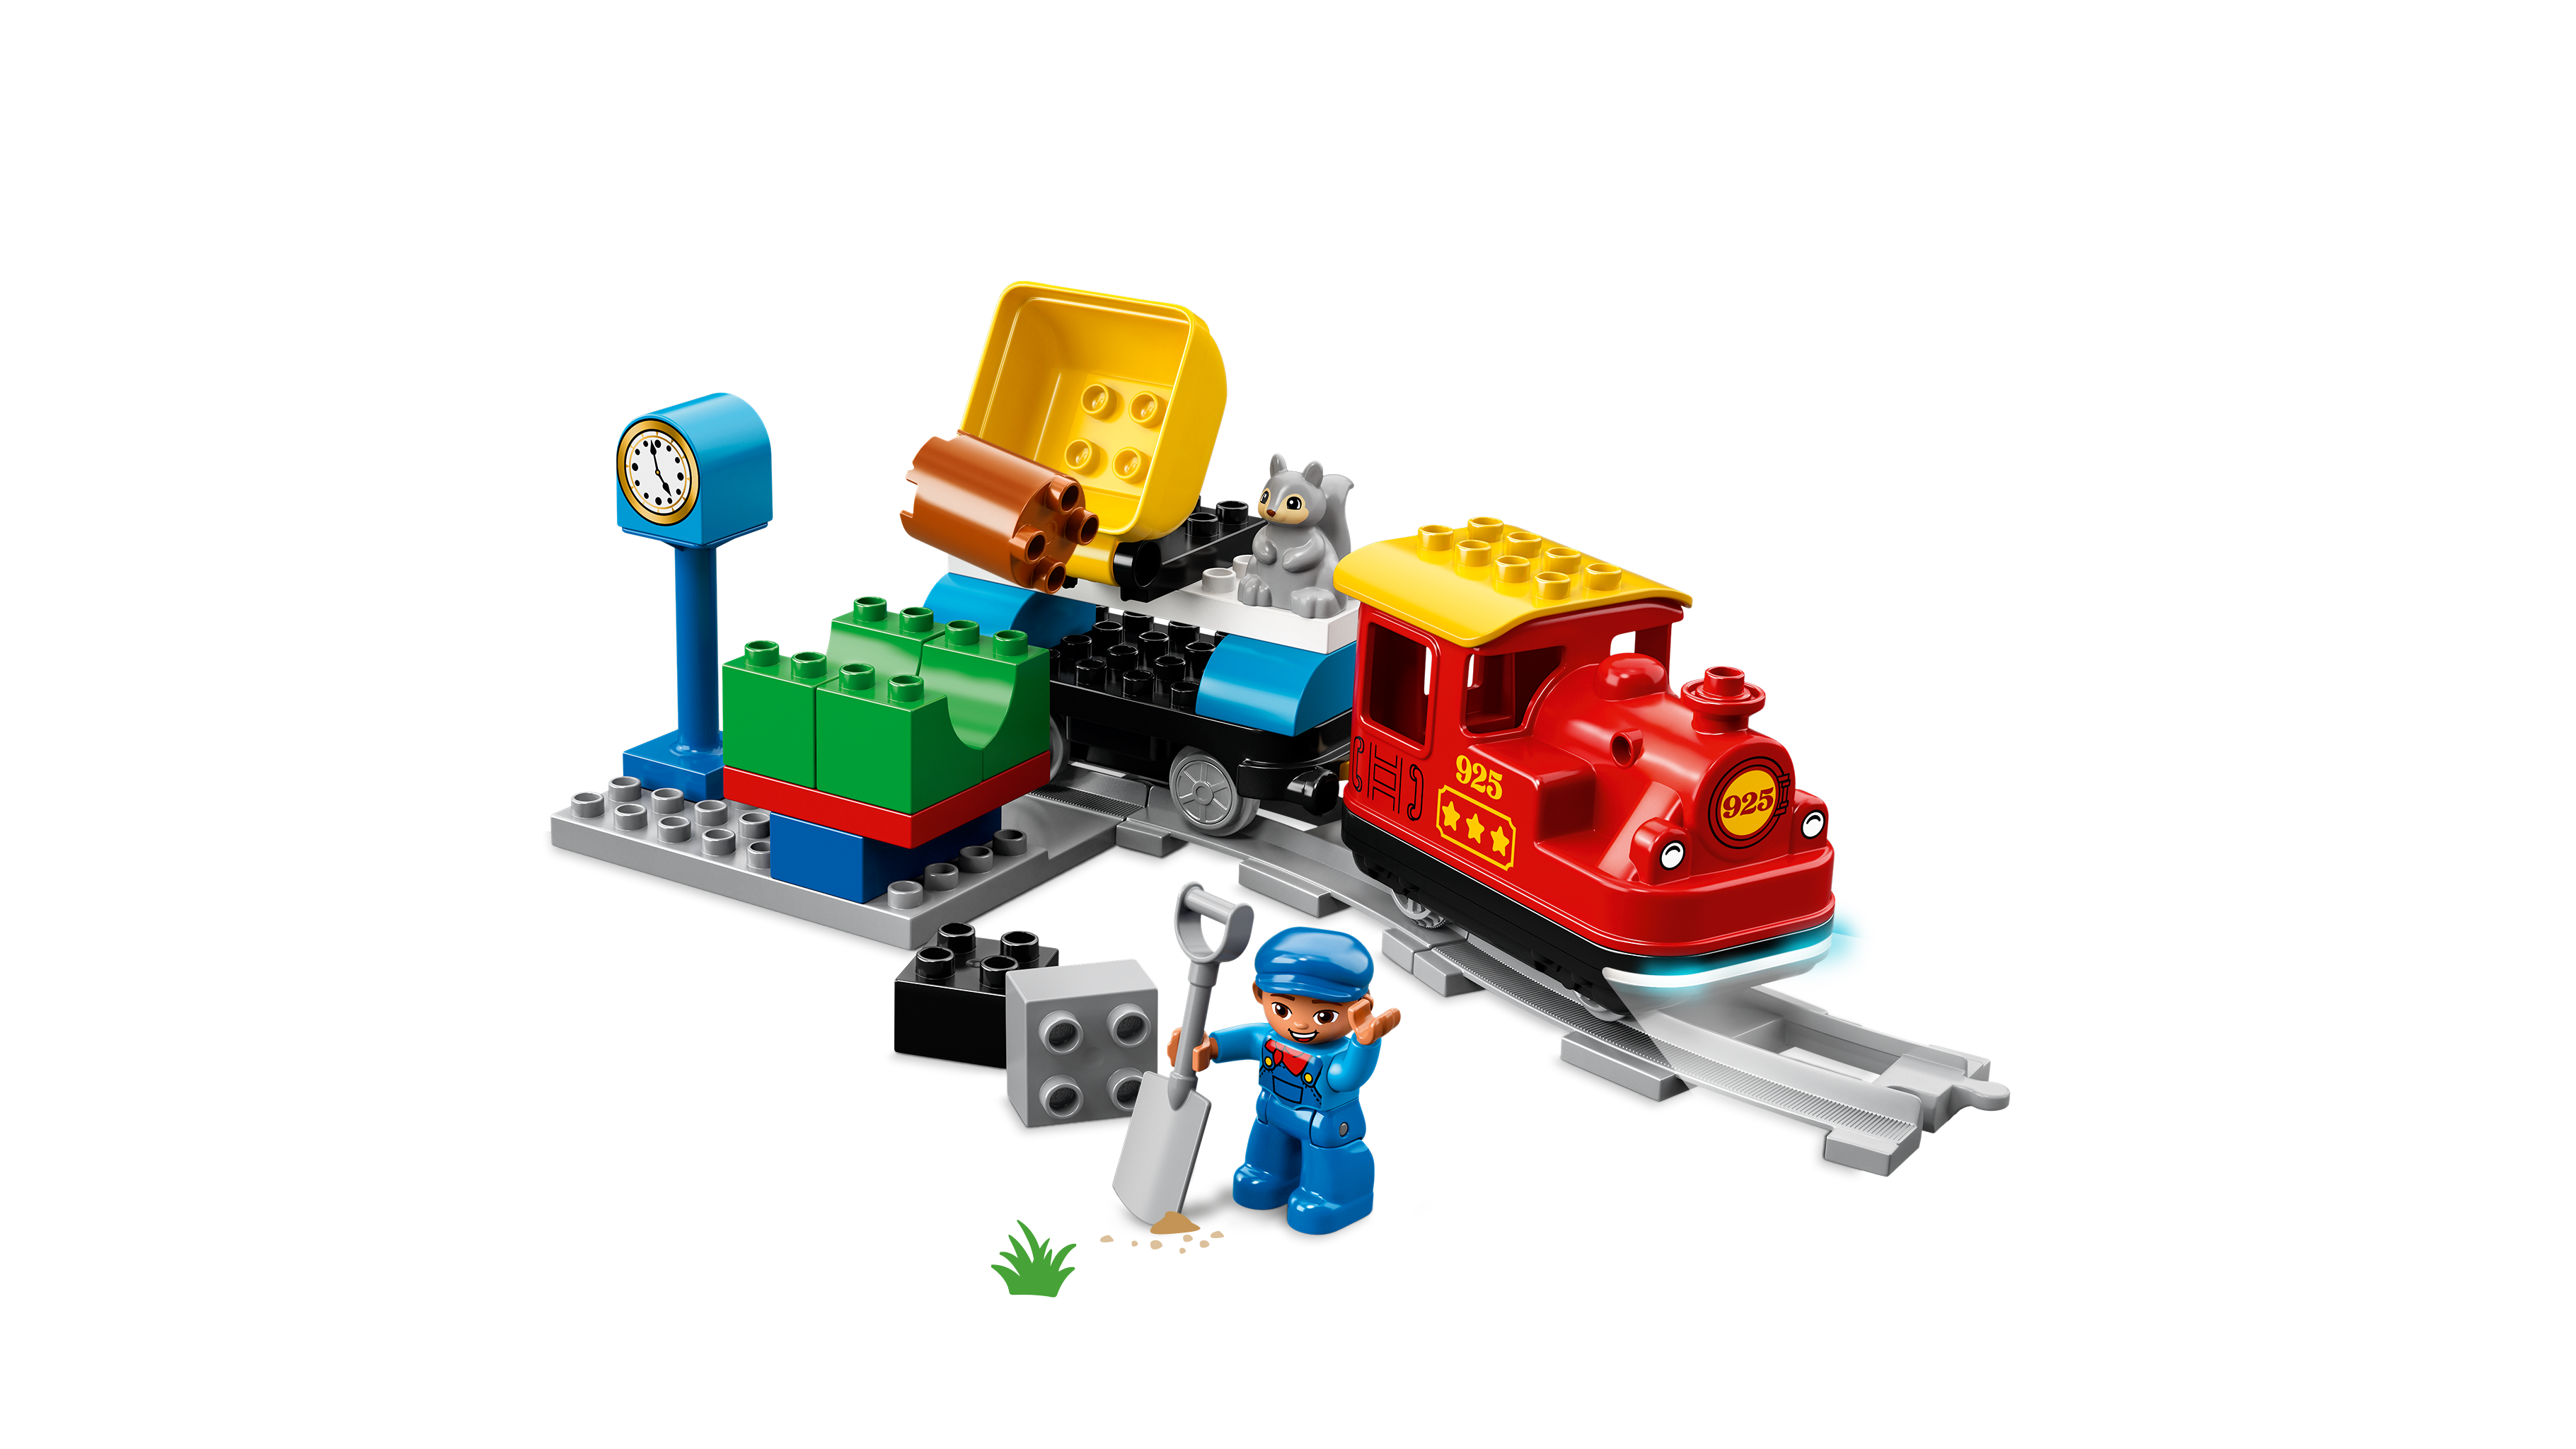 Dampfeisenbahn Bausatz, Mehrfarbig LEGO 10874